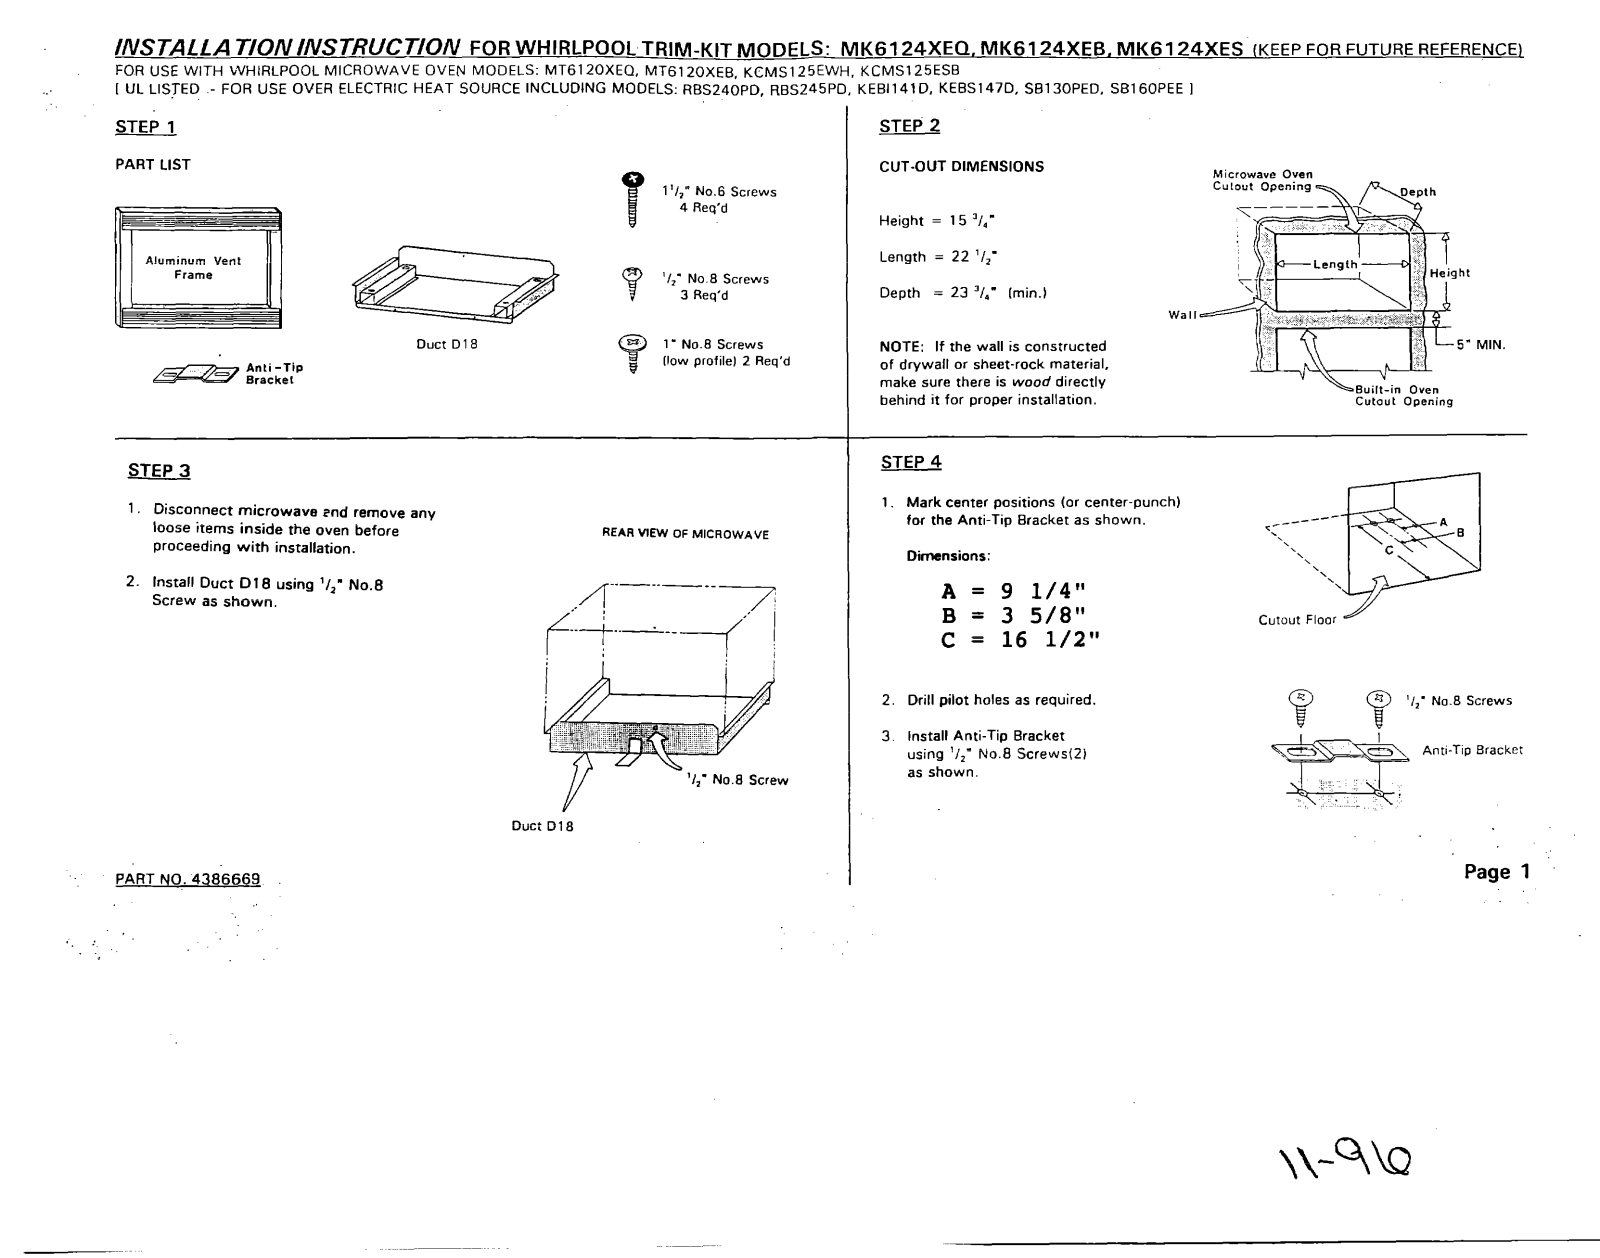 Whirlpool MK 6124 XEQ, MK 6124 XEB, MK 6124 XES Installation Instructions